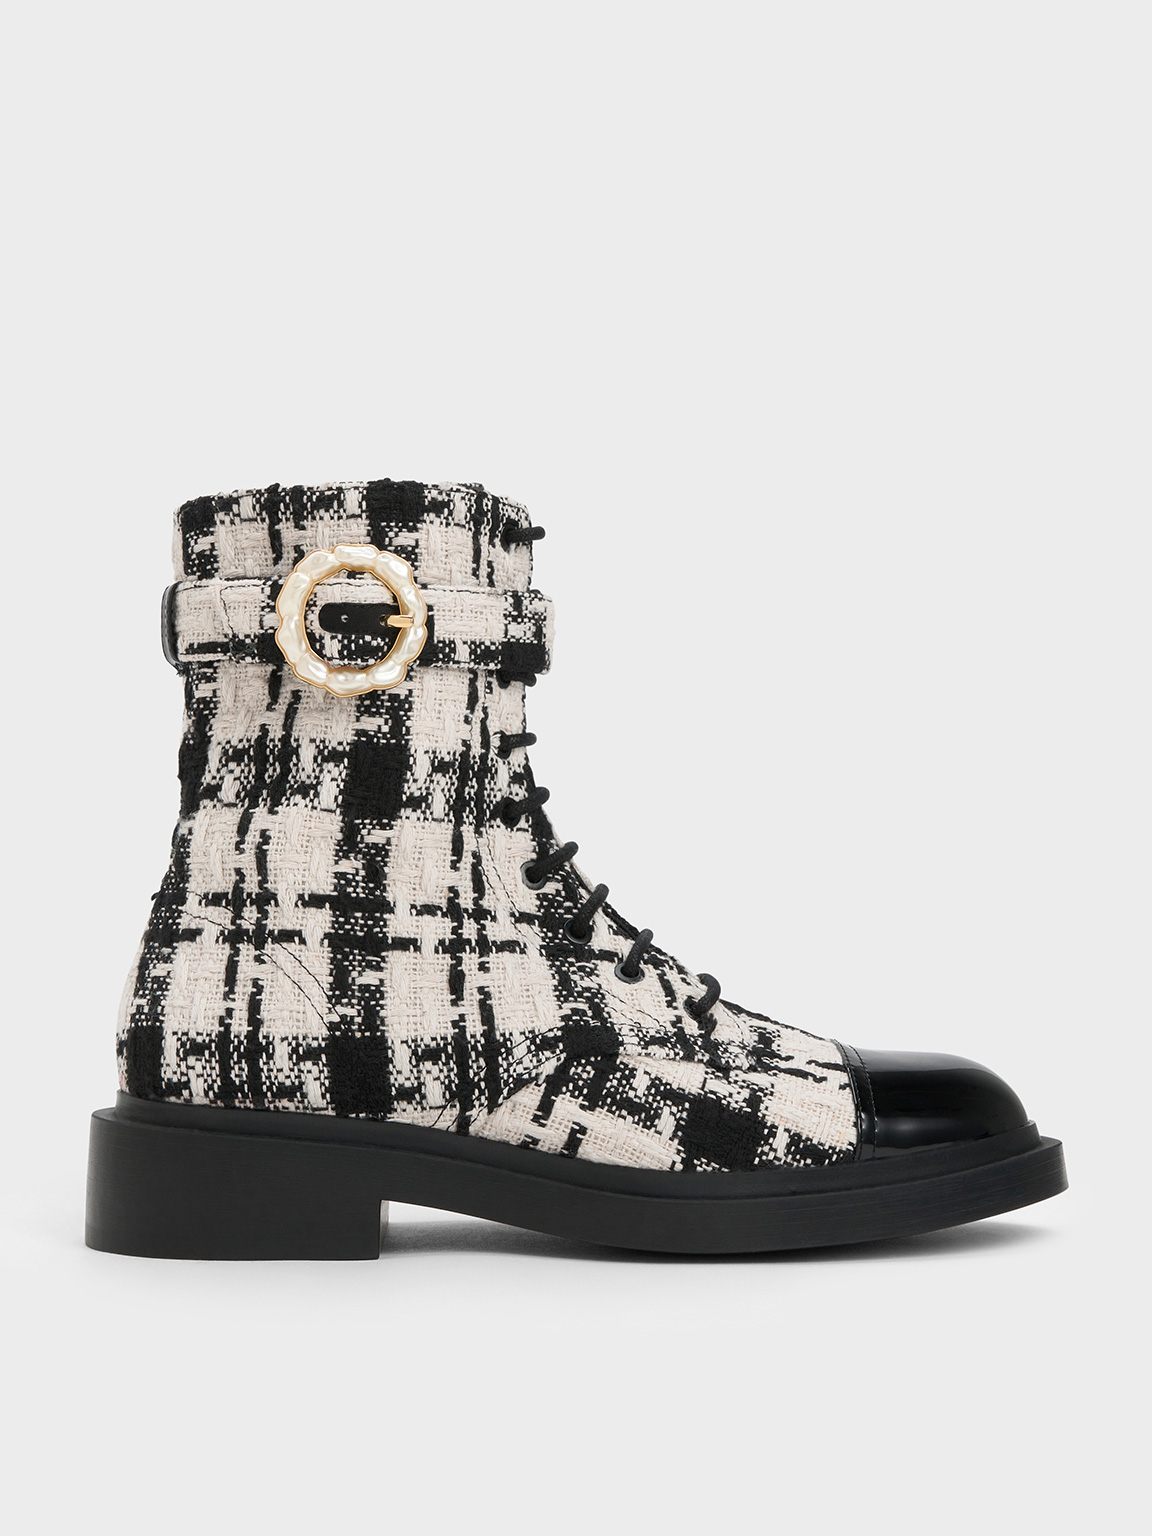 CHANEL, Shoes, Chanel Fur Logo Black White Snow Boots Sz 385